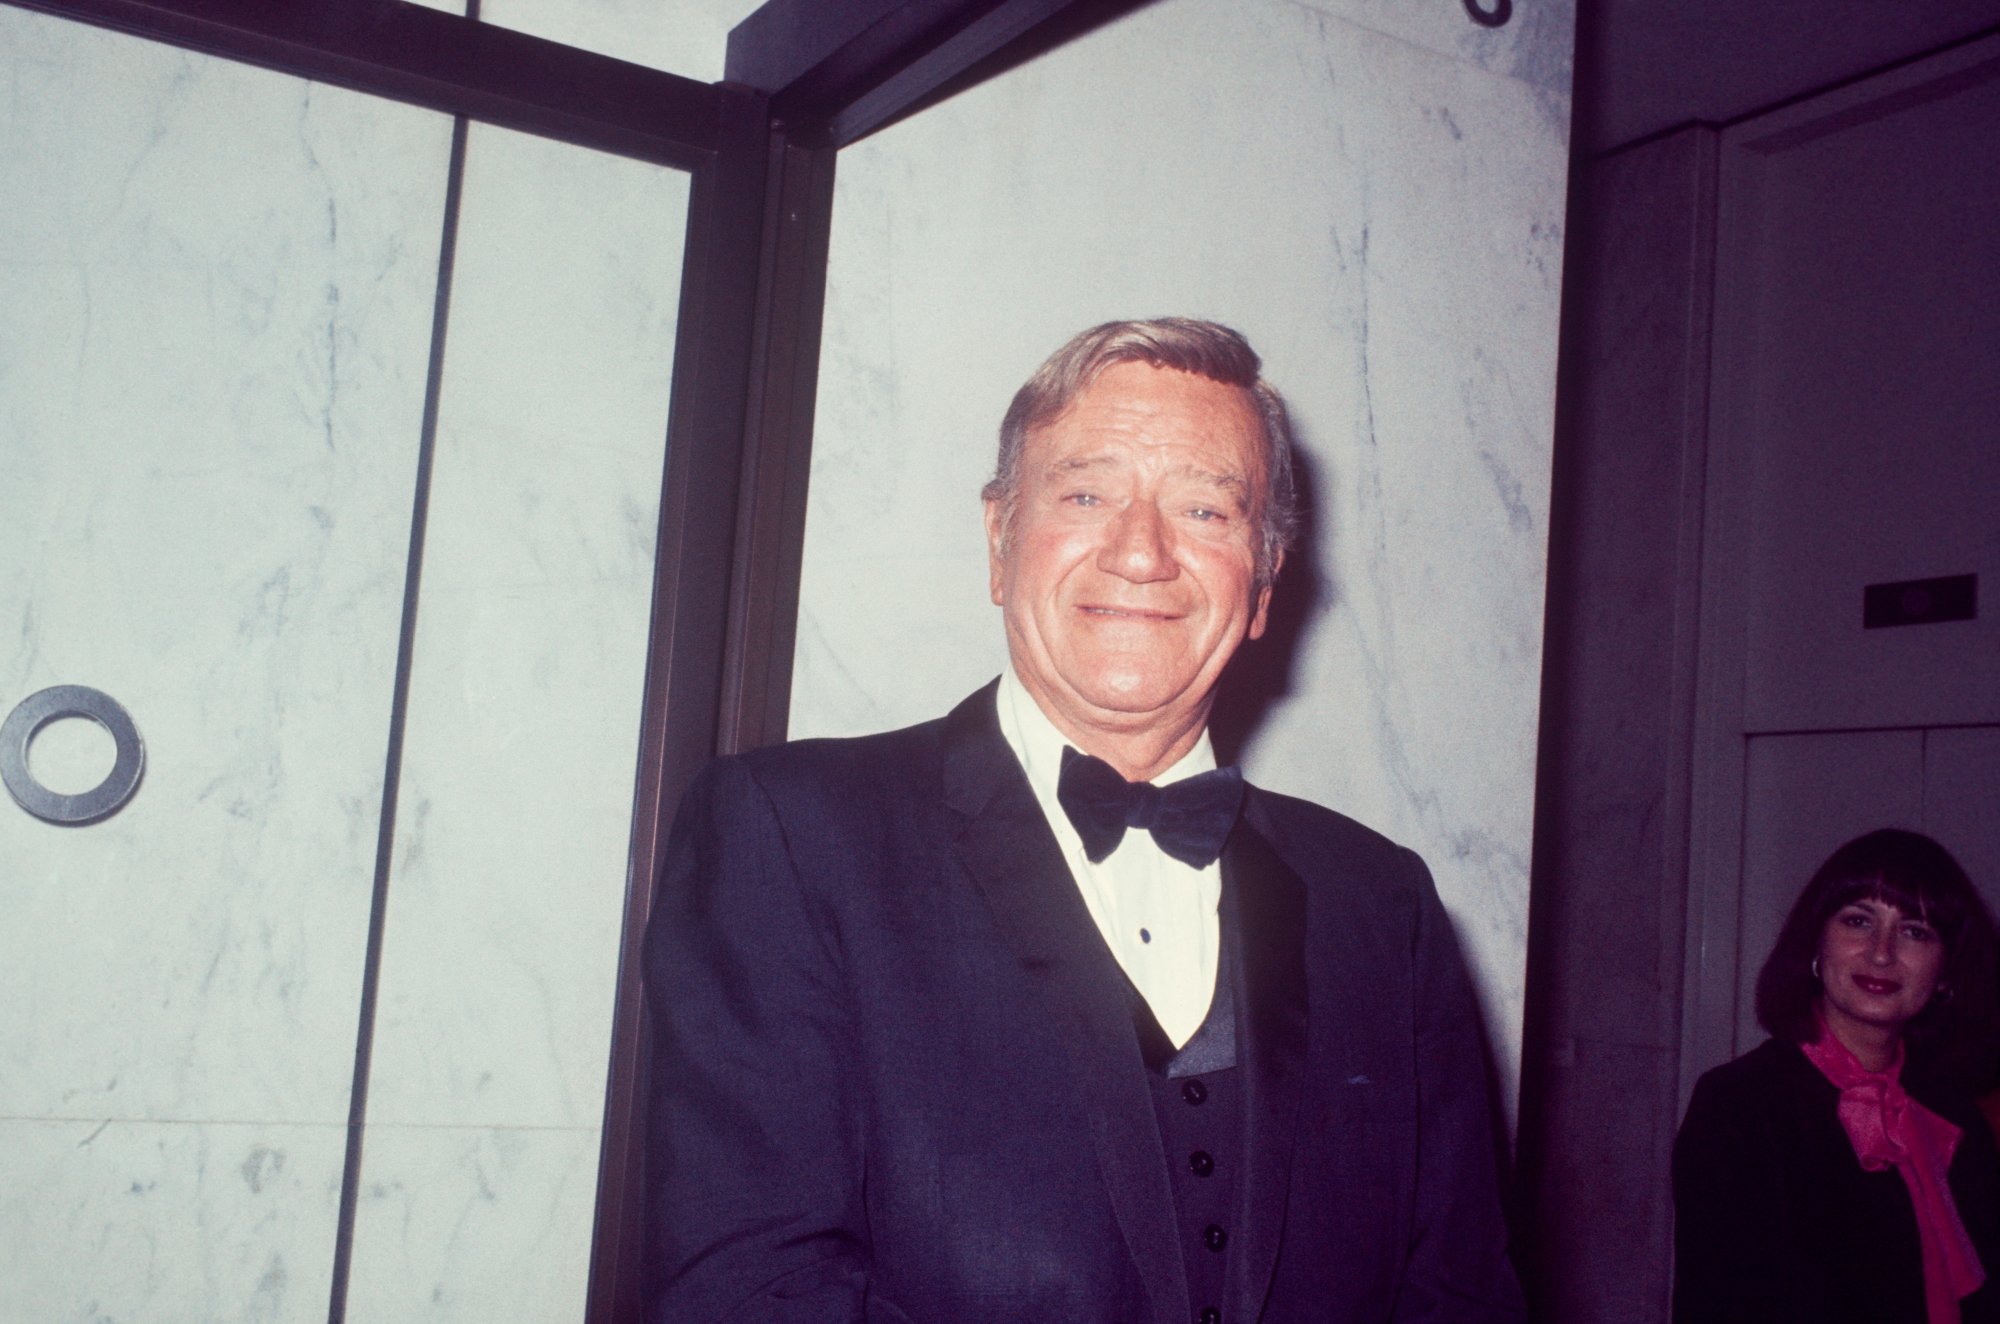 1973 Oscars presenter John Wayne smiling wearing a tux